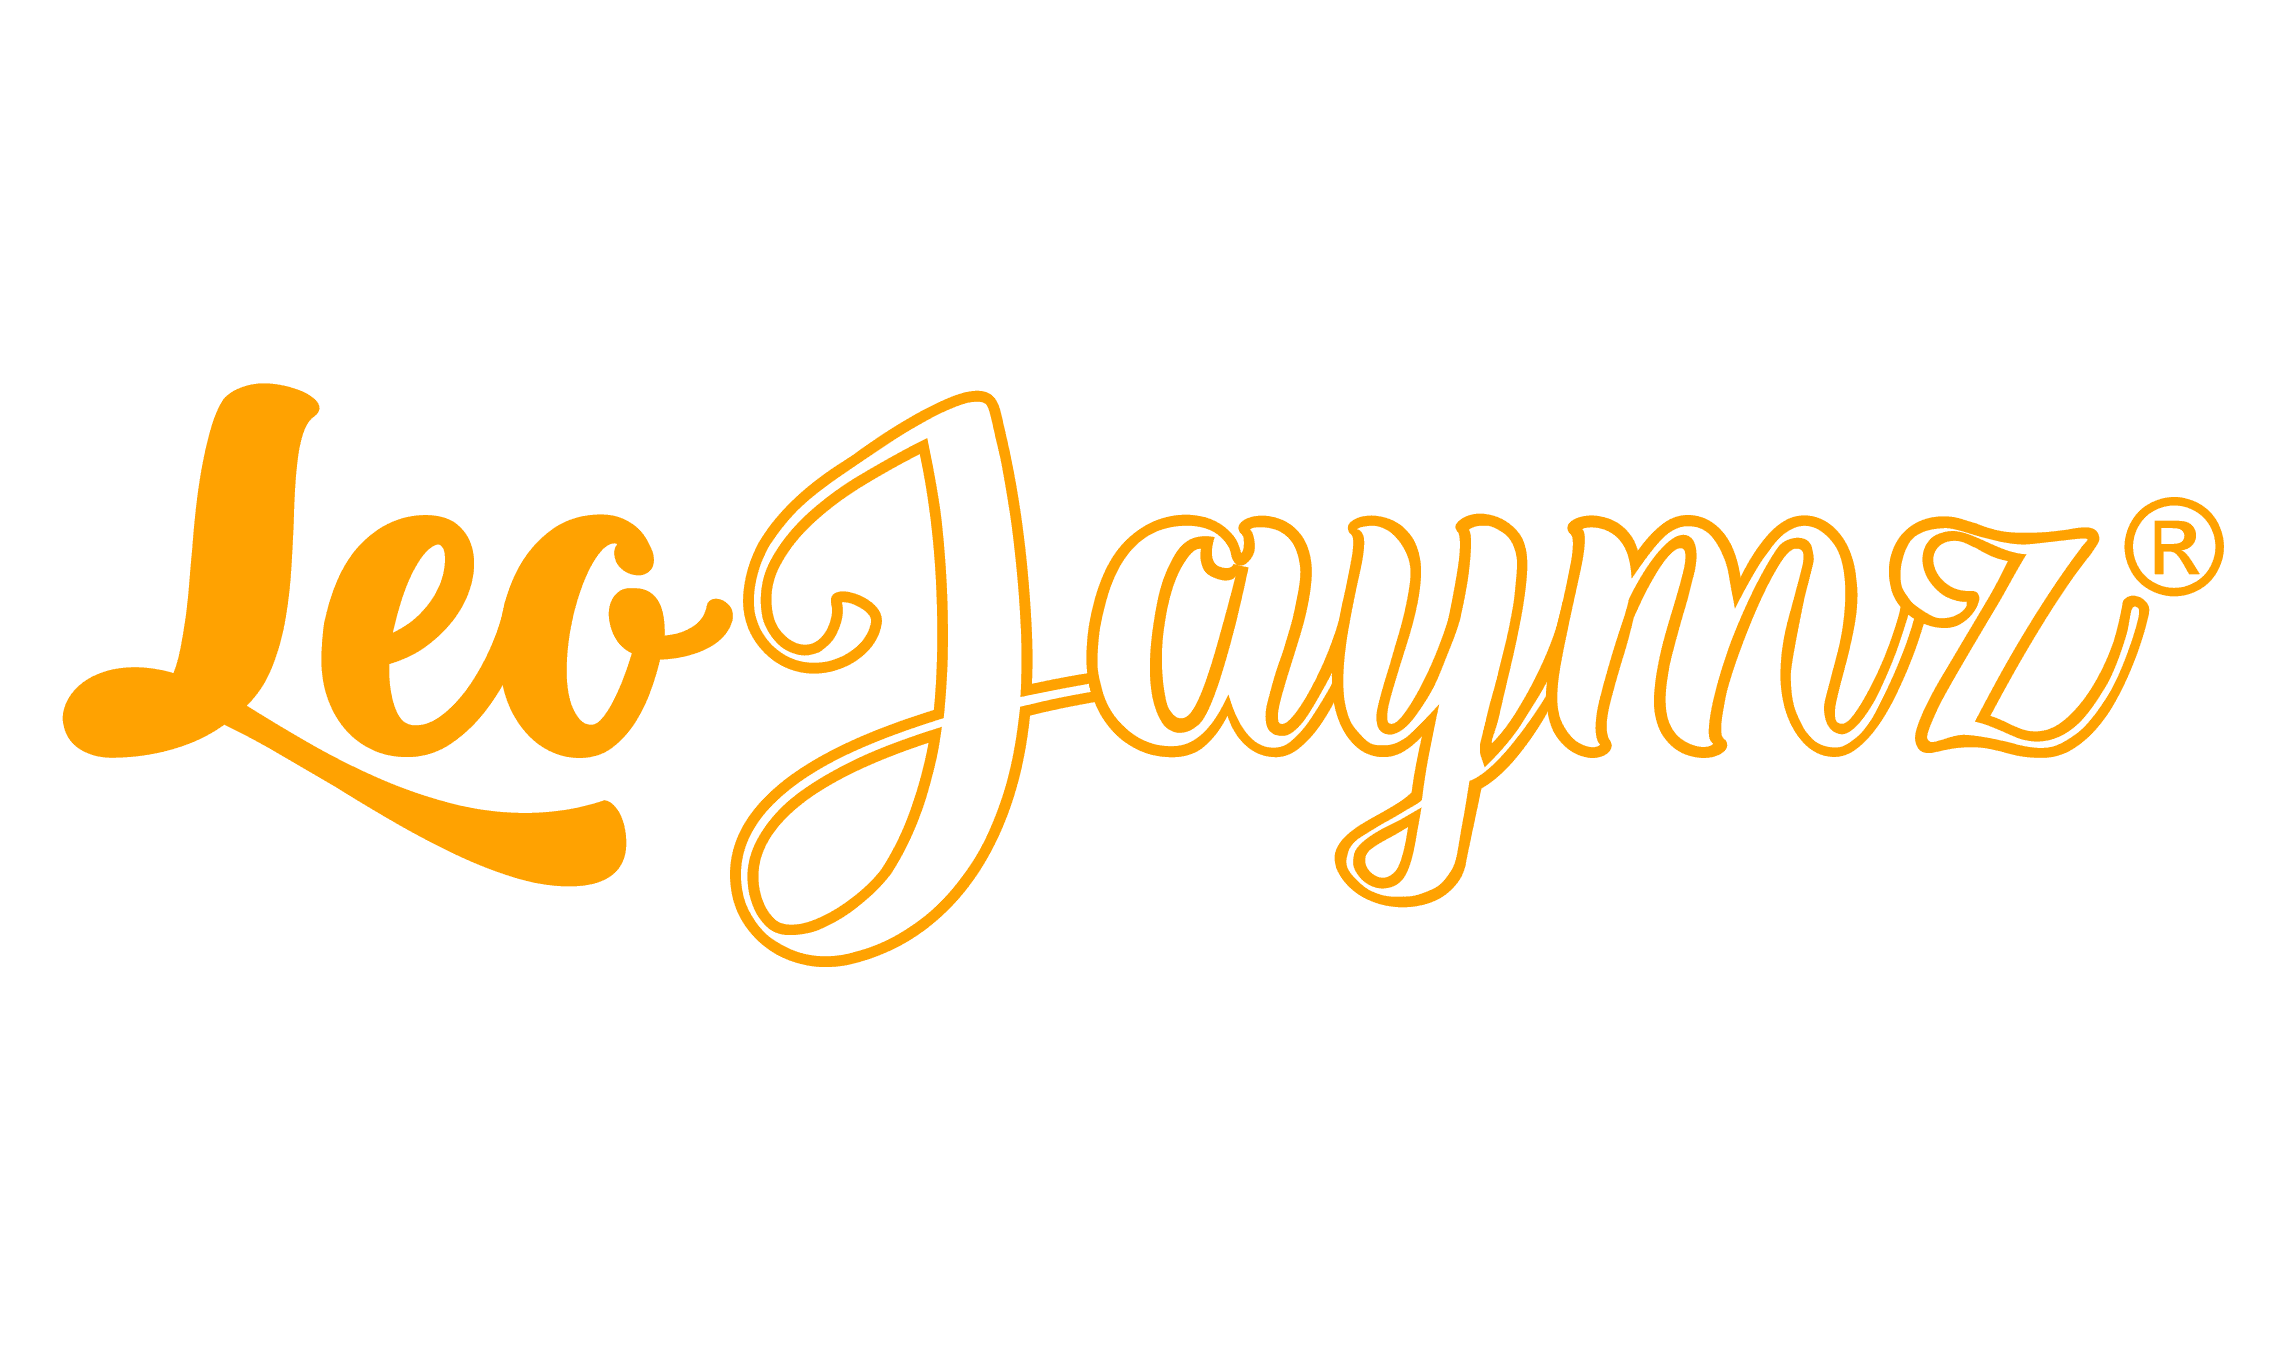 Leo-Jaymz-2020-1